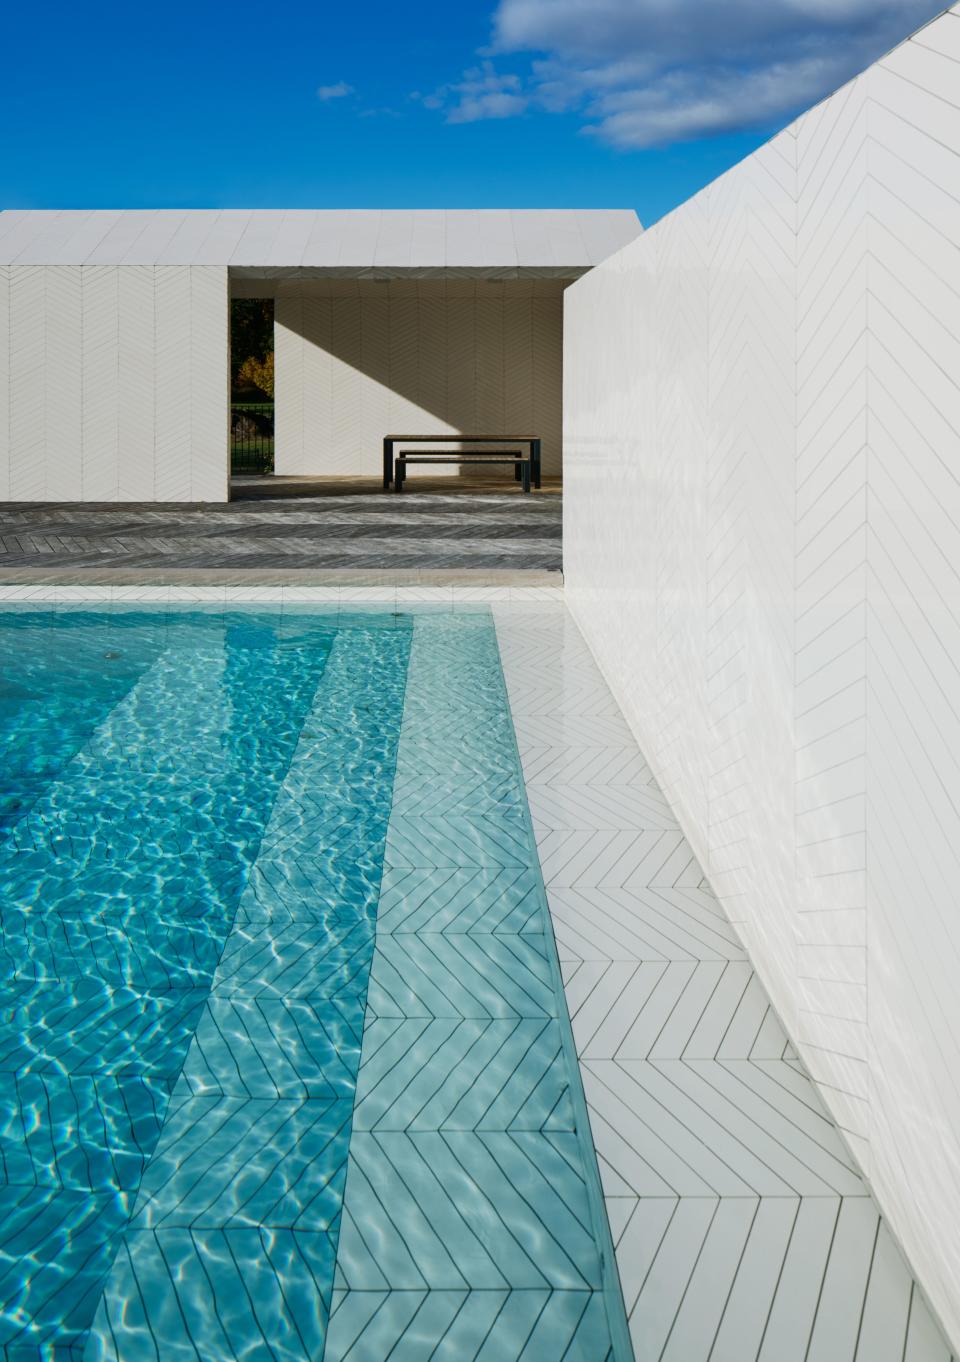 Claesson Koivisto Rune built this spa pool in Sweden in 2016.